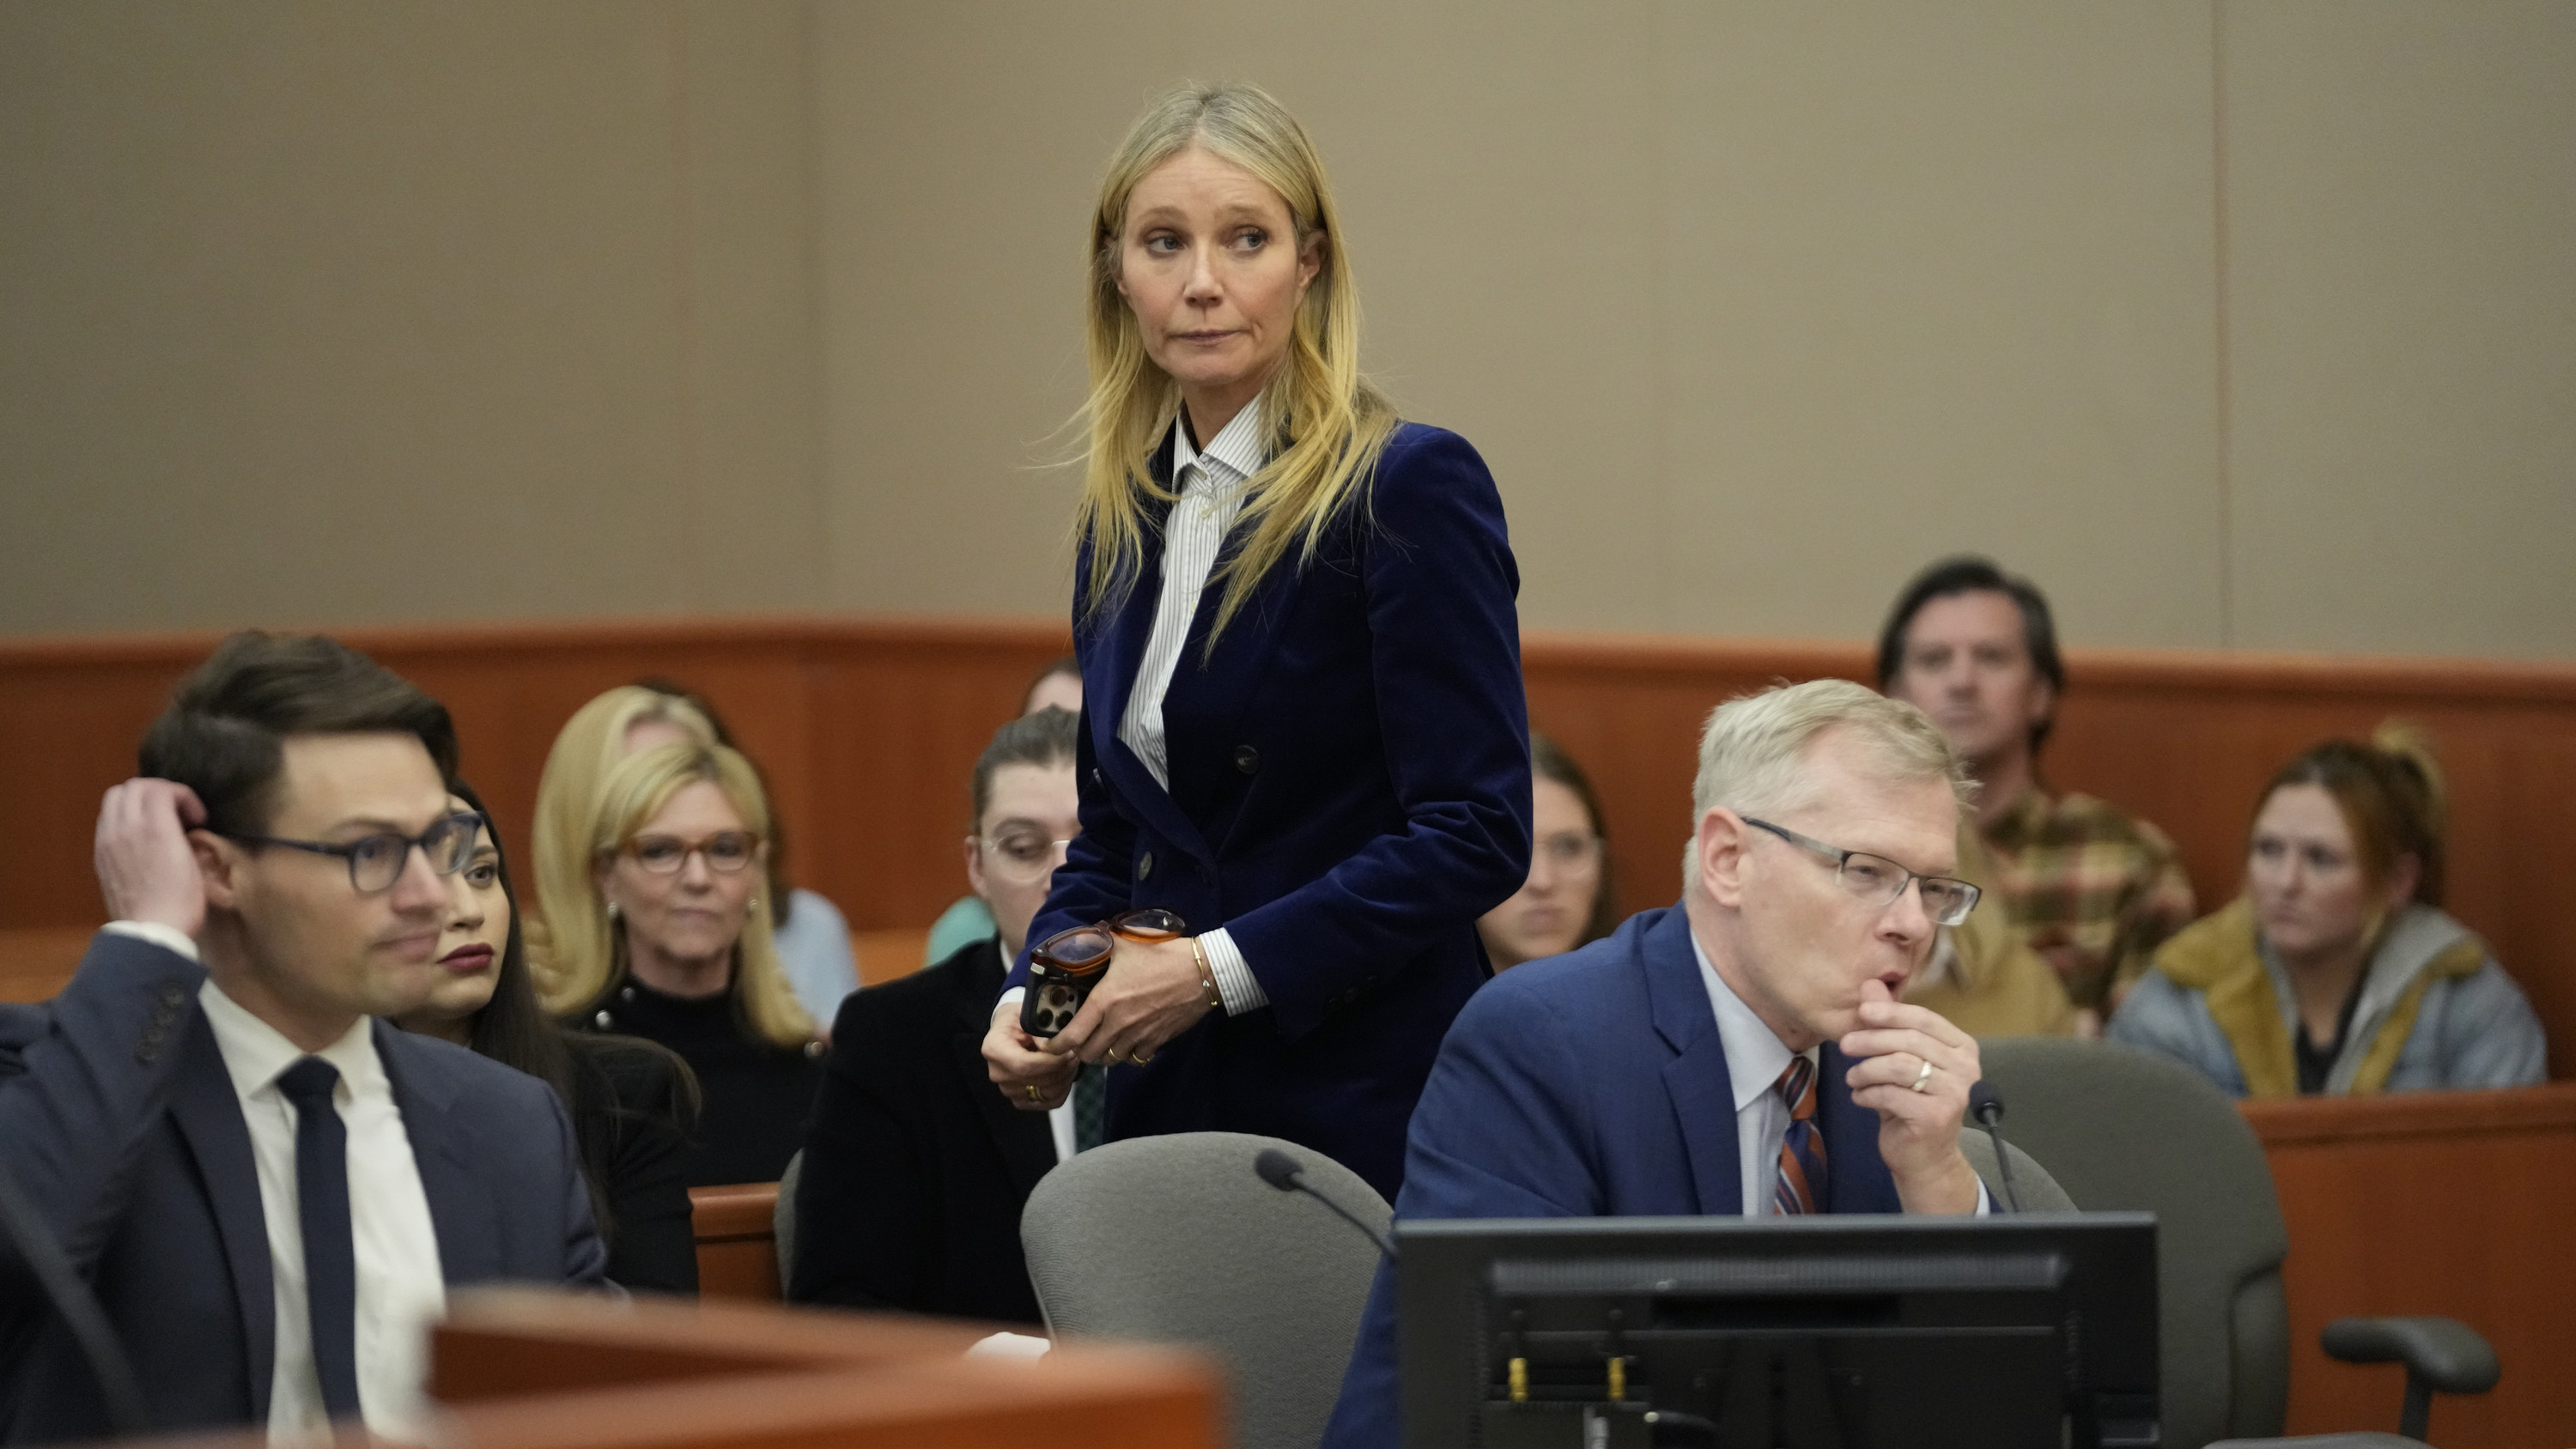 Gwyneth standing in court